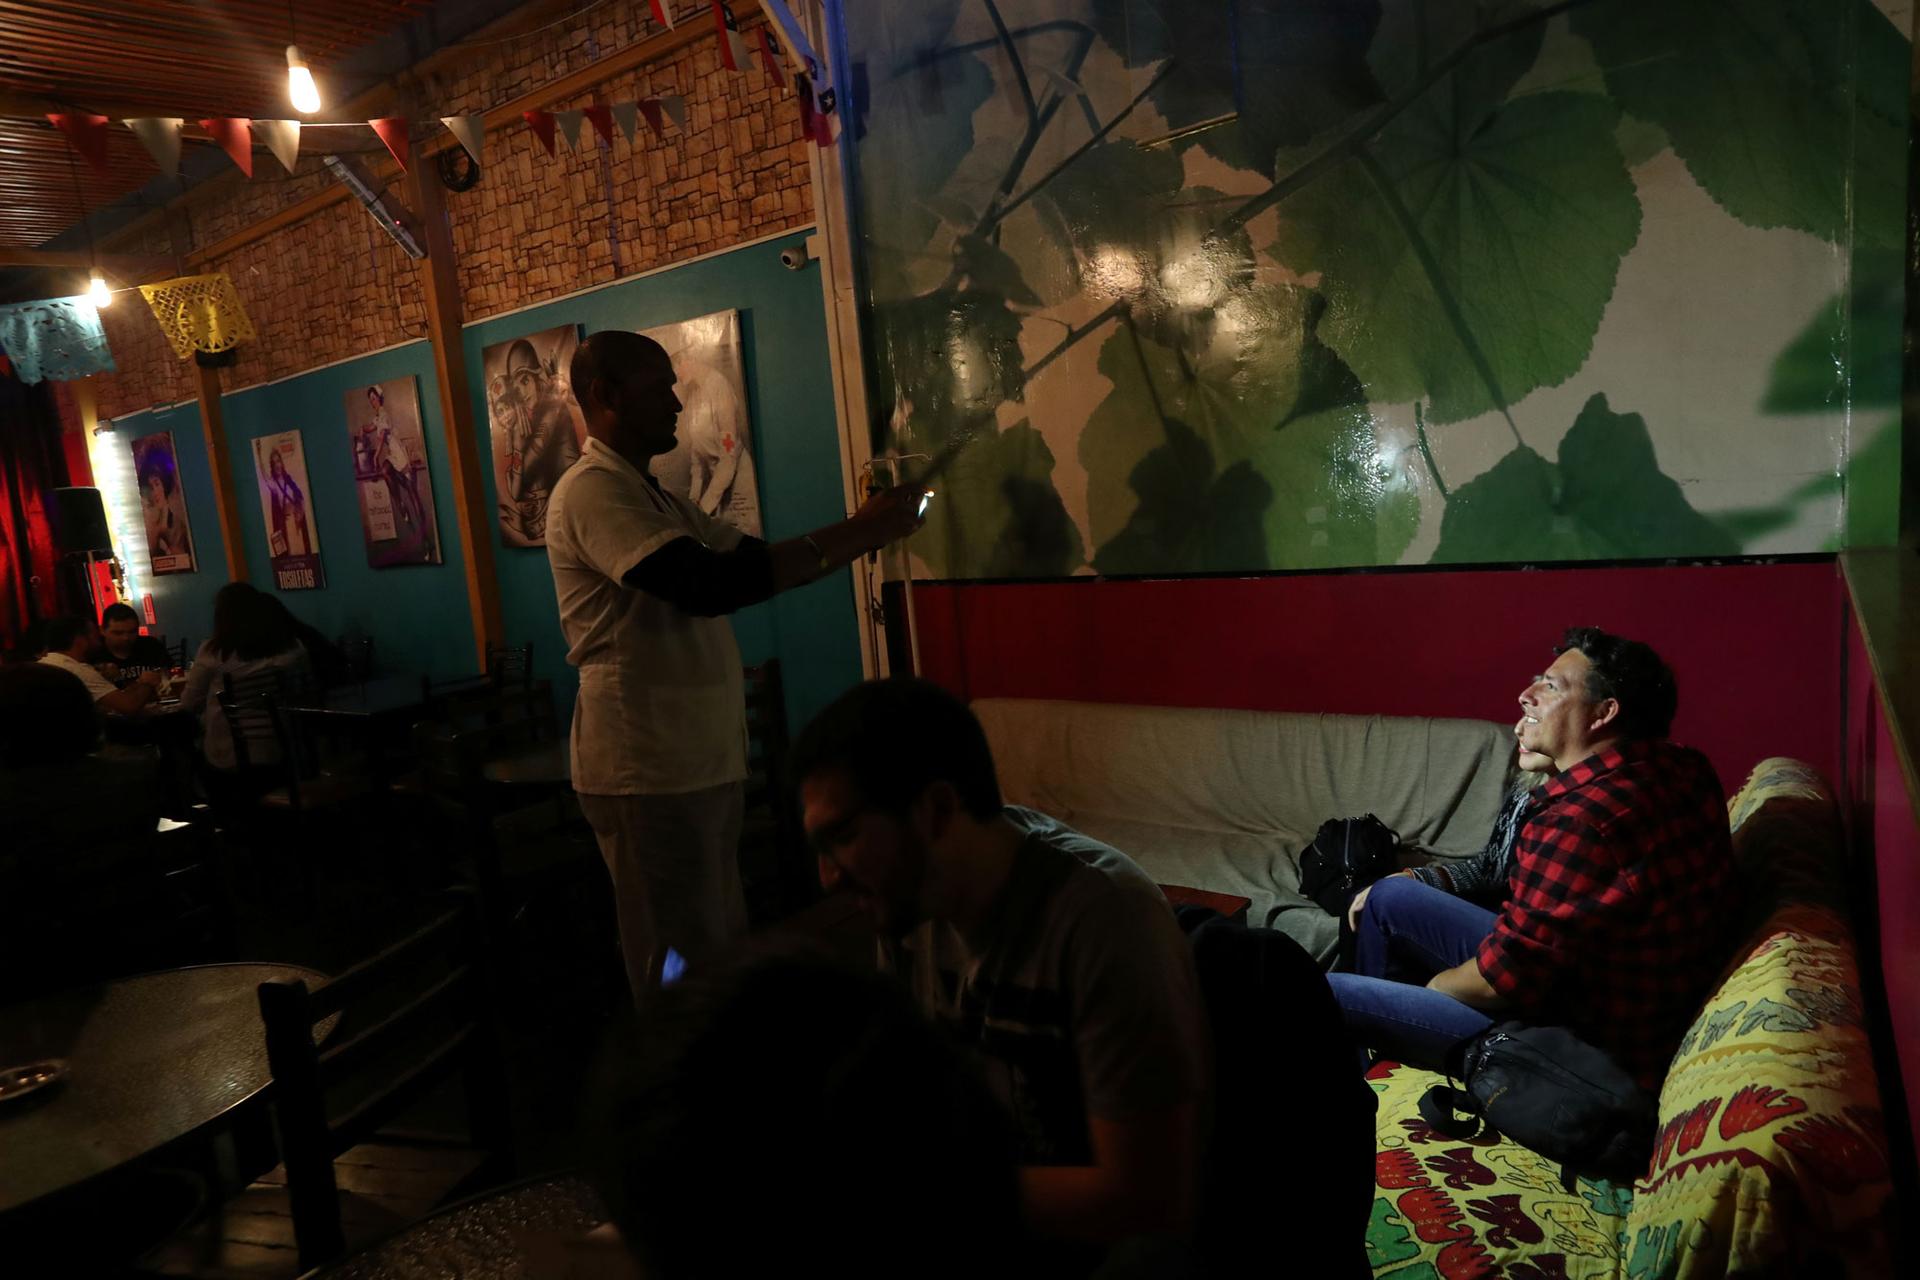 In this darkly lit restaurant, Venezuelan migrant Enrique Miller takes a picture using a flash.